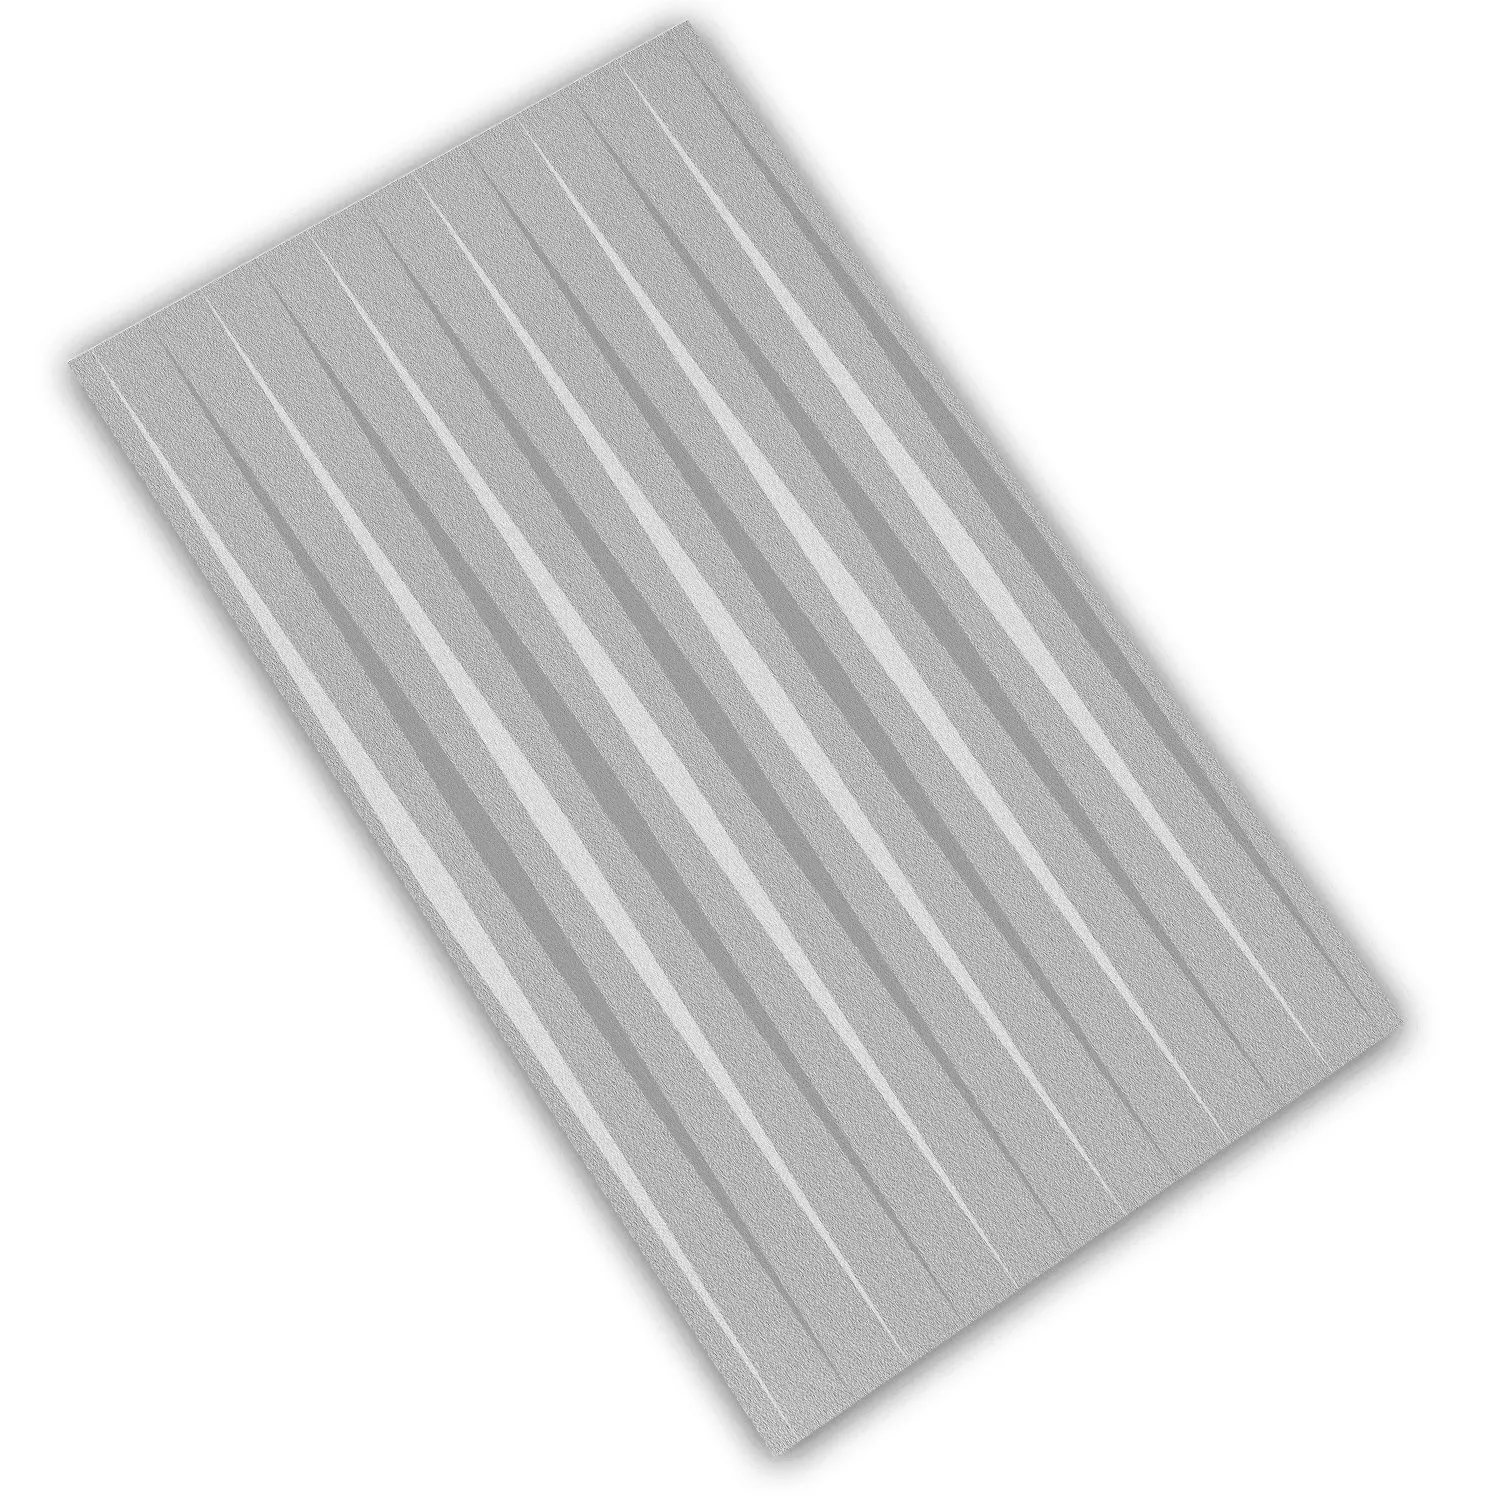 Kakel Vulcano Stripes Dekor Rektifierad Grå 60x120cm